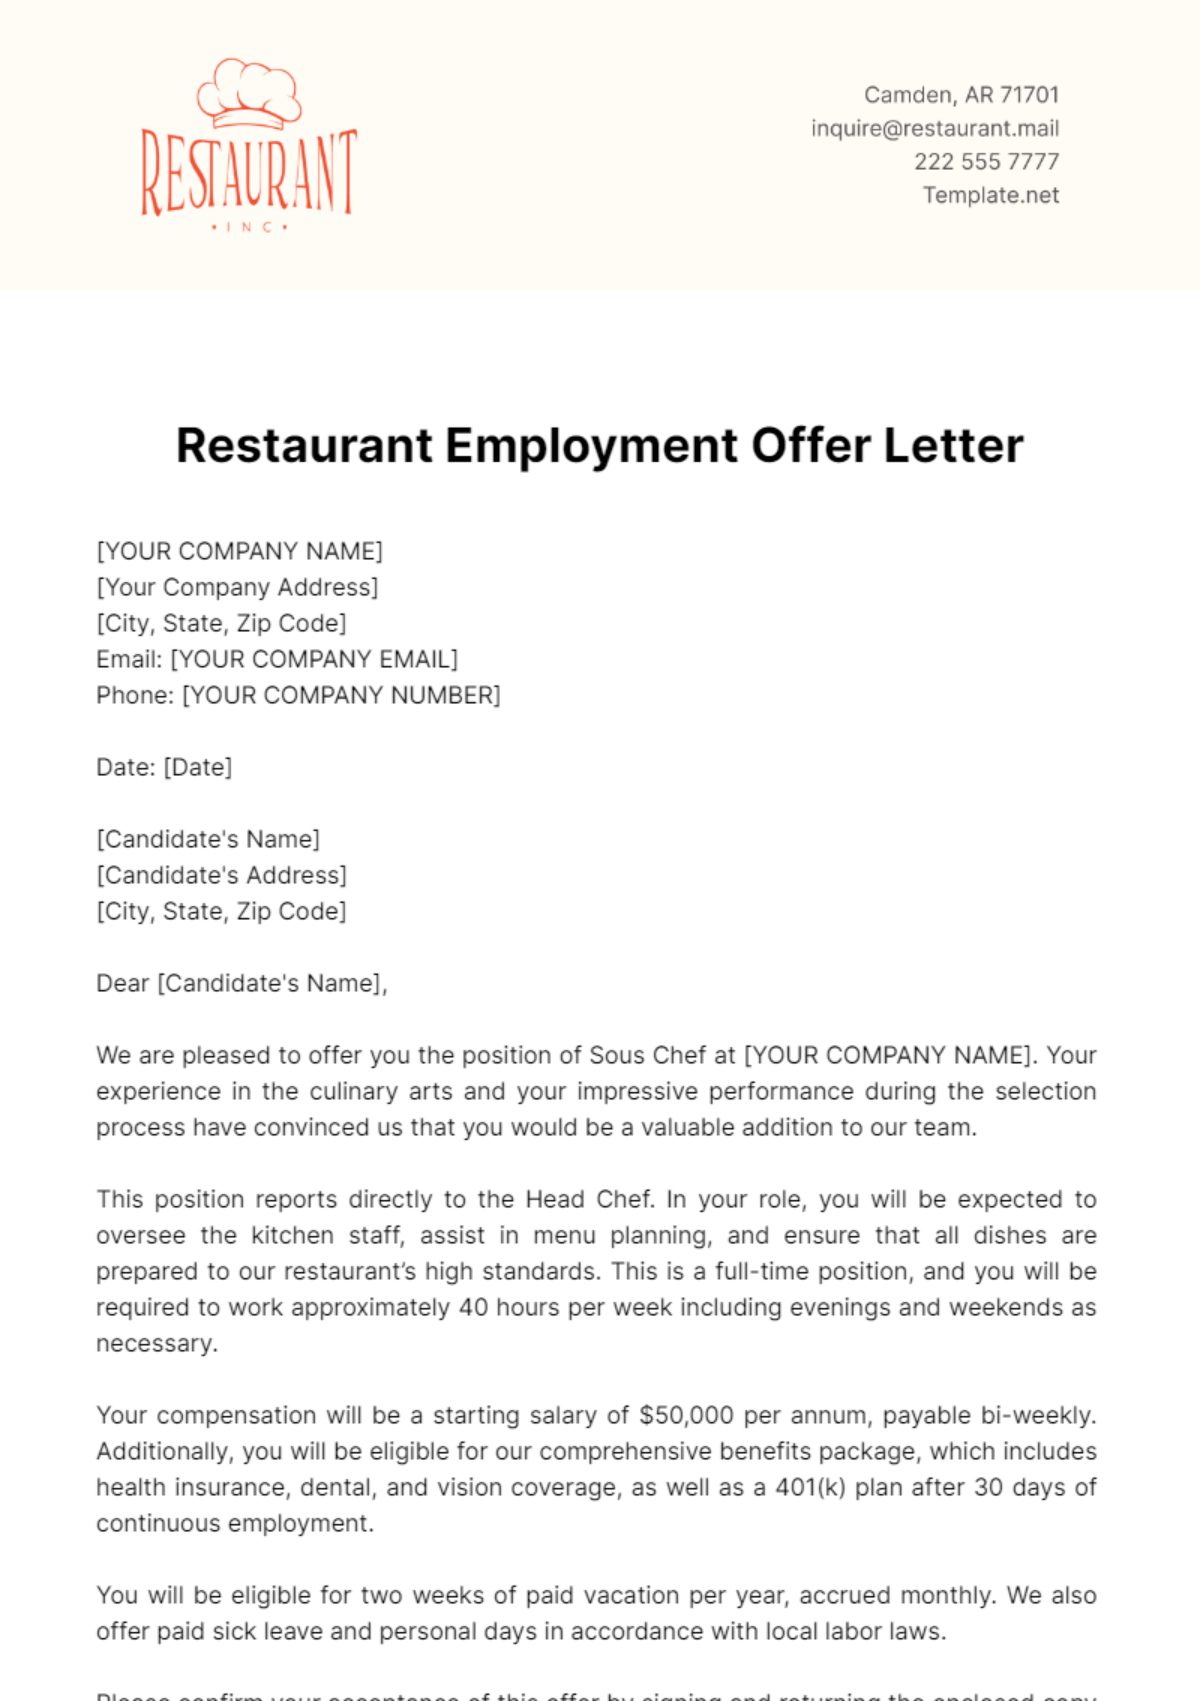 Free Restaurant Employment Offer Letter Template